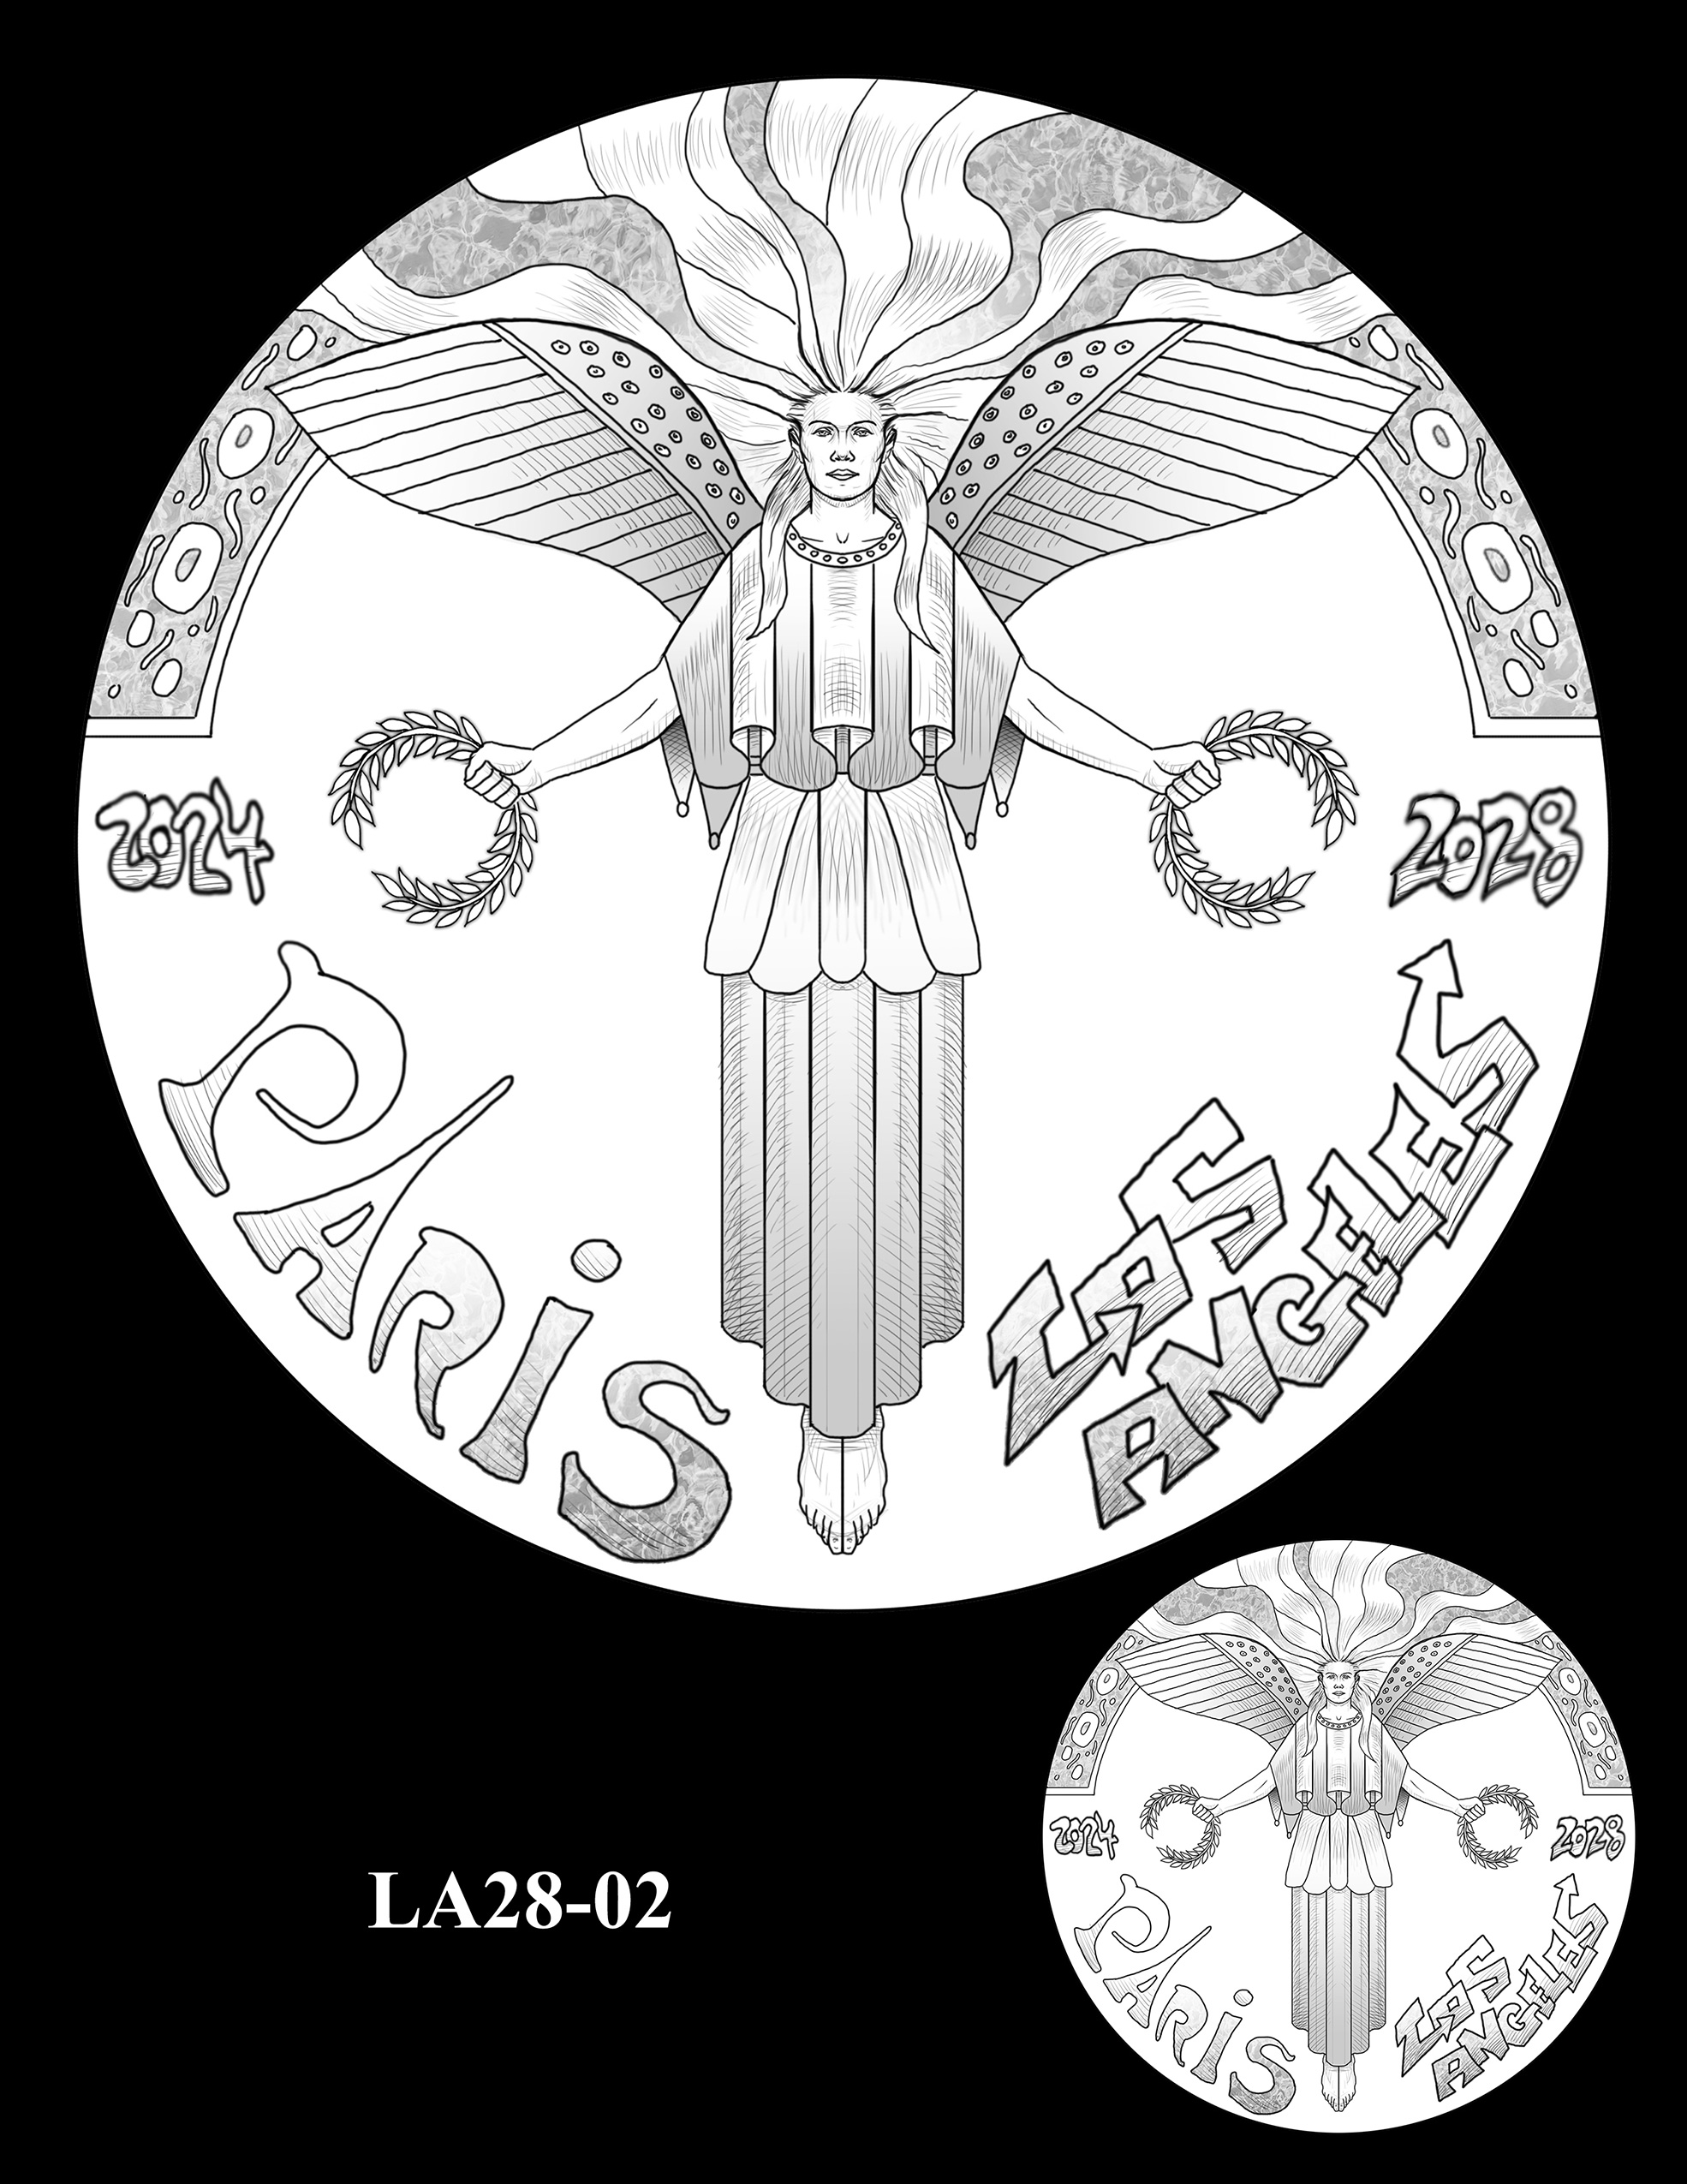 LA28-02 -- Olympics Handover Medallion